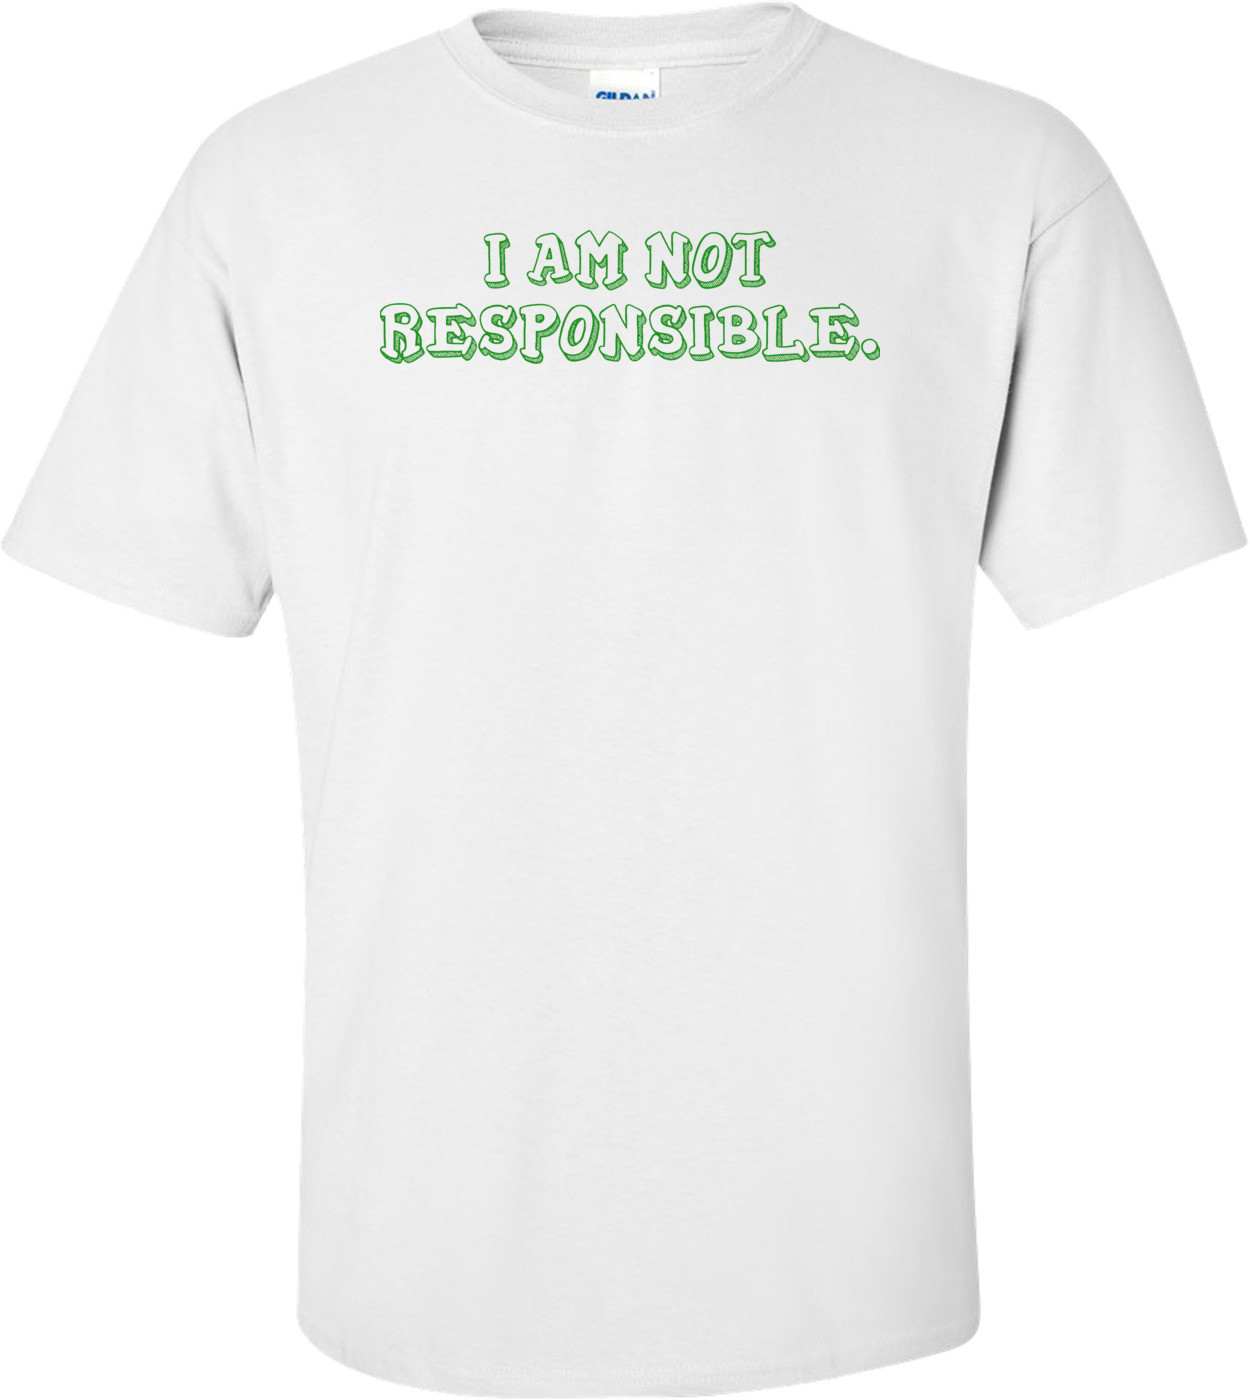 I AM NOT RESPONSIBLE. Shirt